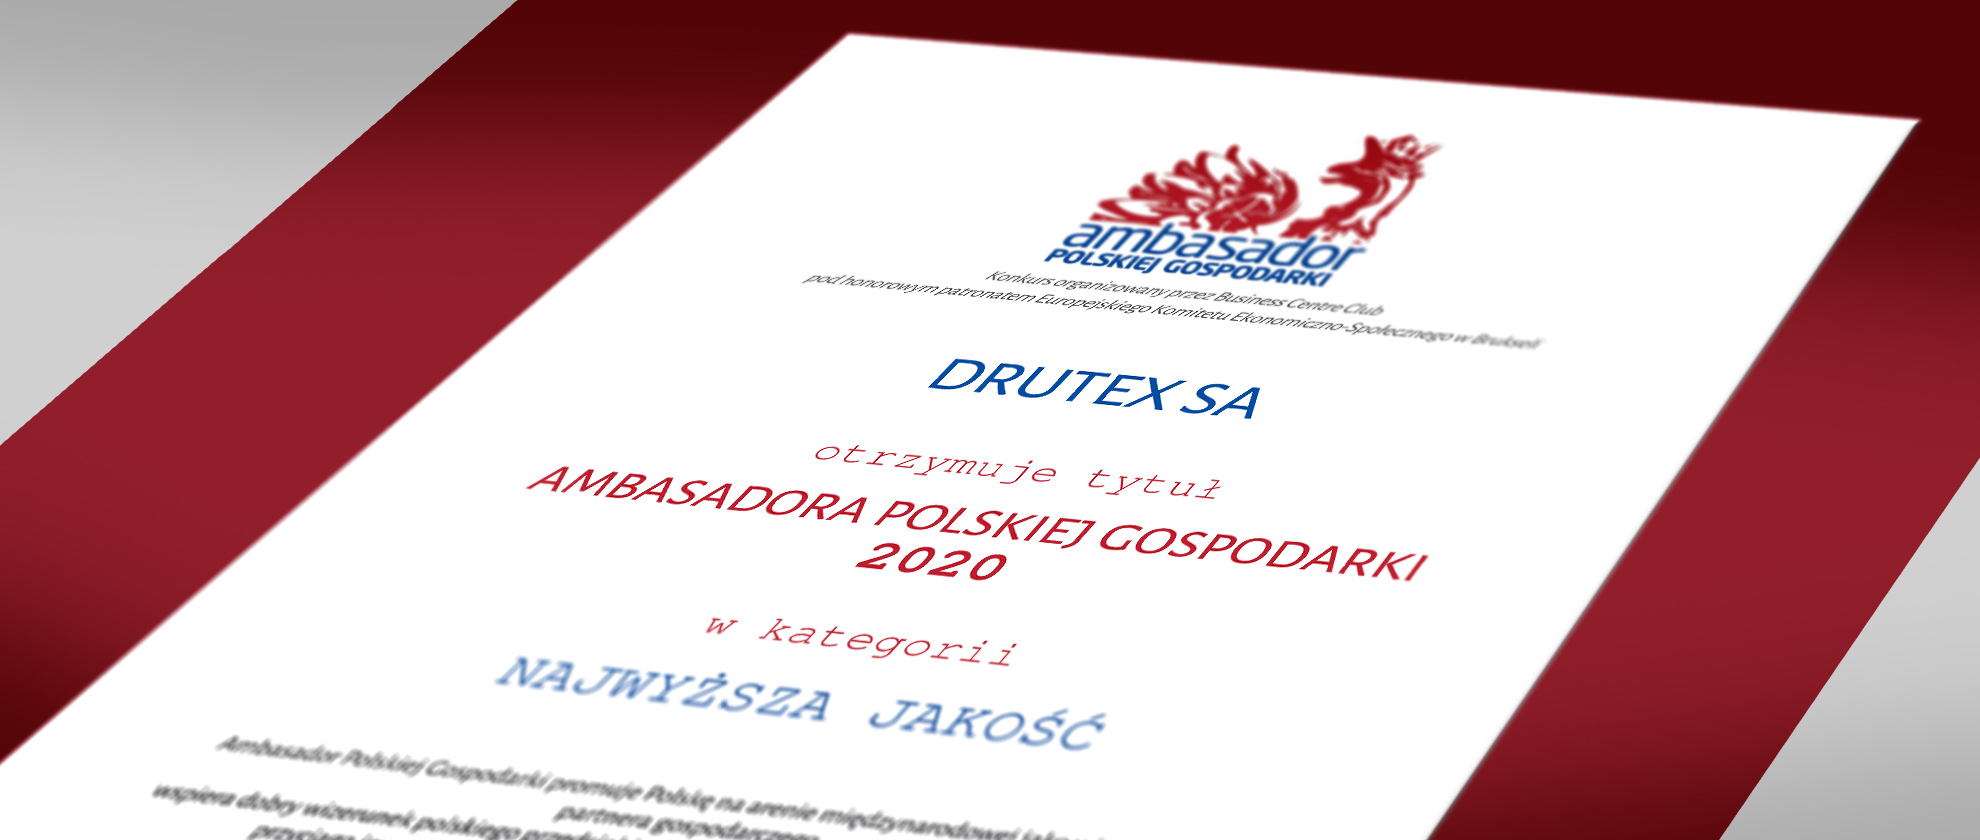 DRUTEX Ambasadorem Polskiej Gospodarki